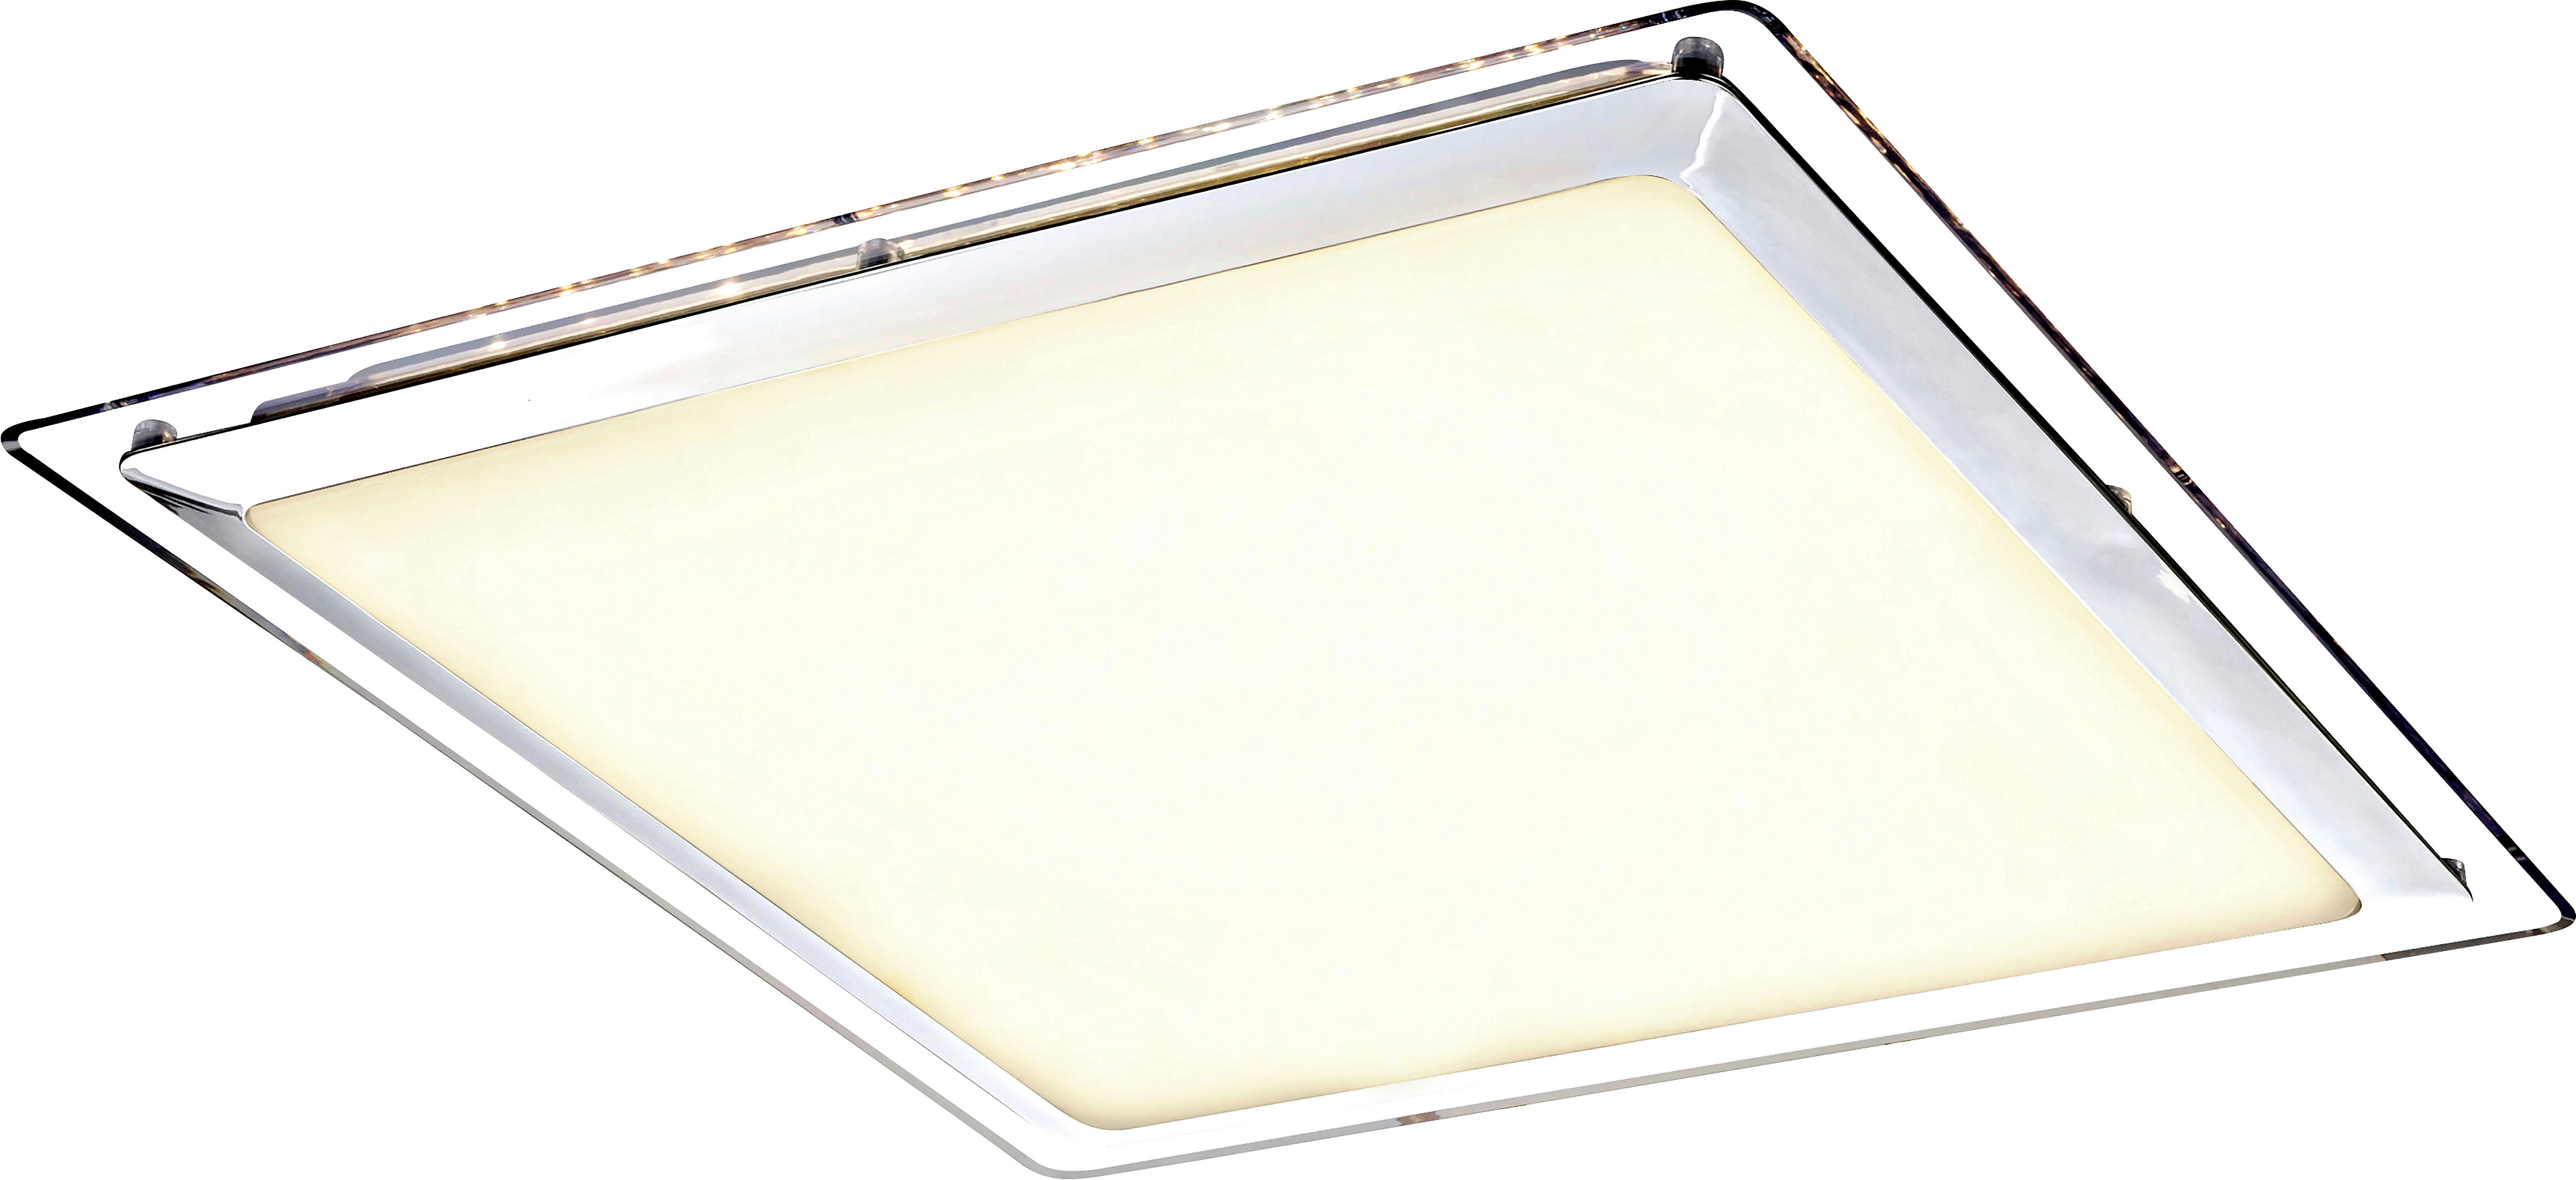 LED STROPNÁ LAMPA, 44,5/7,5/44,5 cm - biela/opál, Basics, kov/plast (44,5/7,5/44,5cm) - Novel